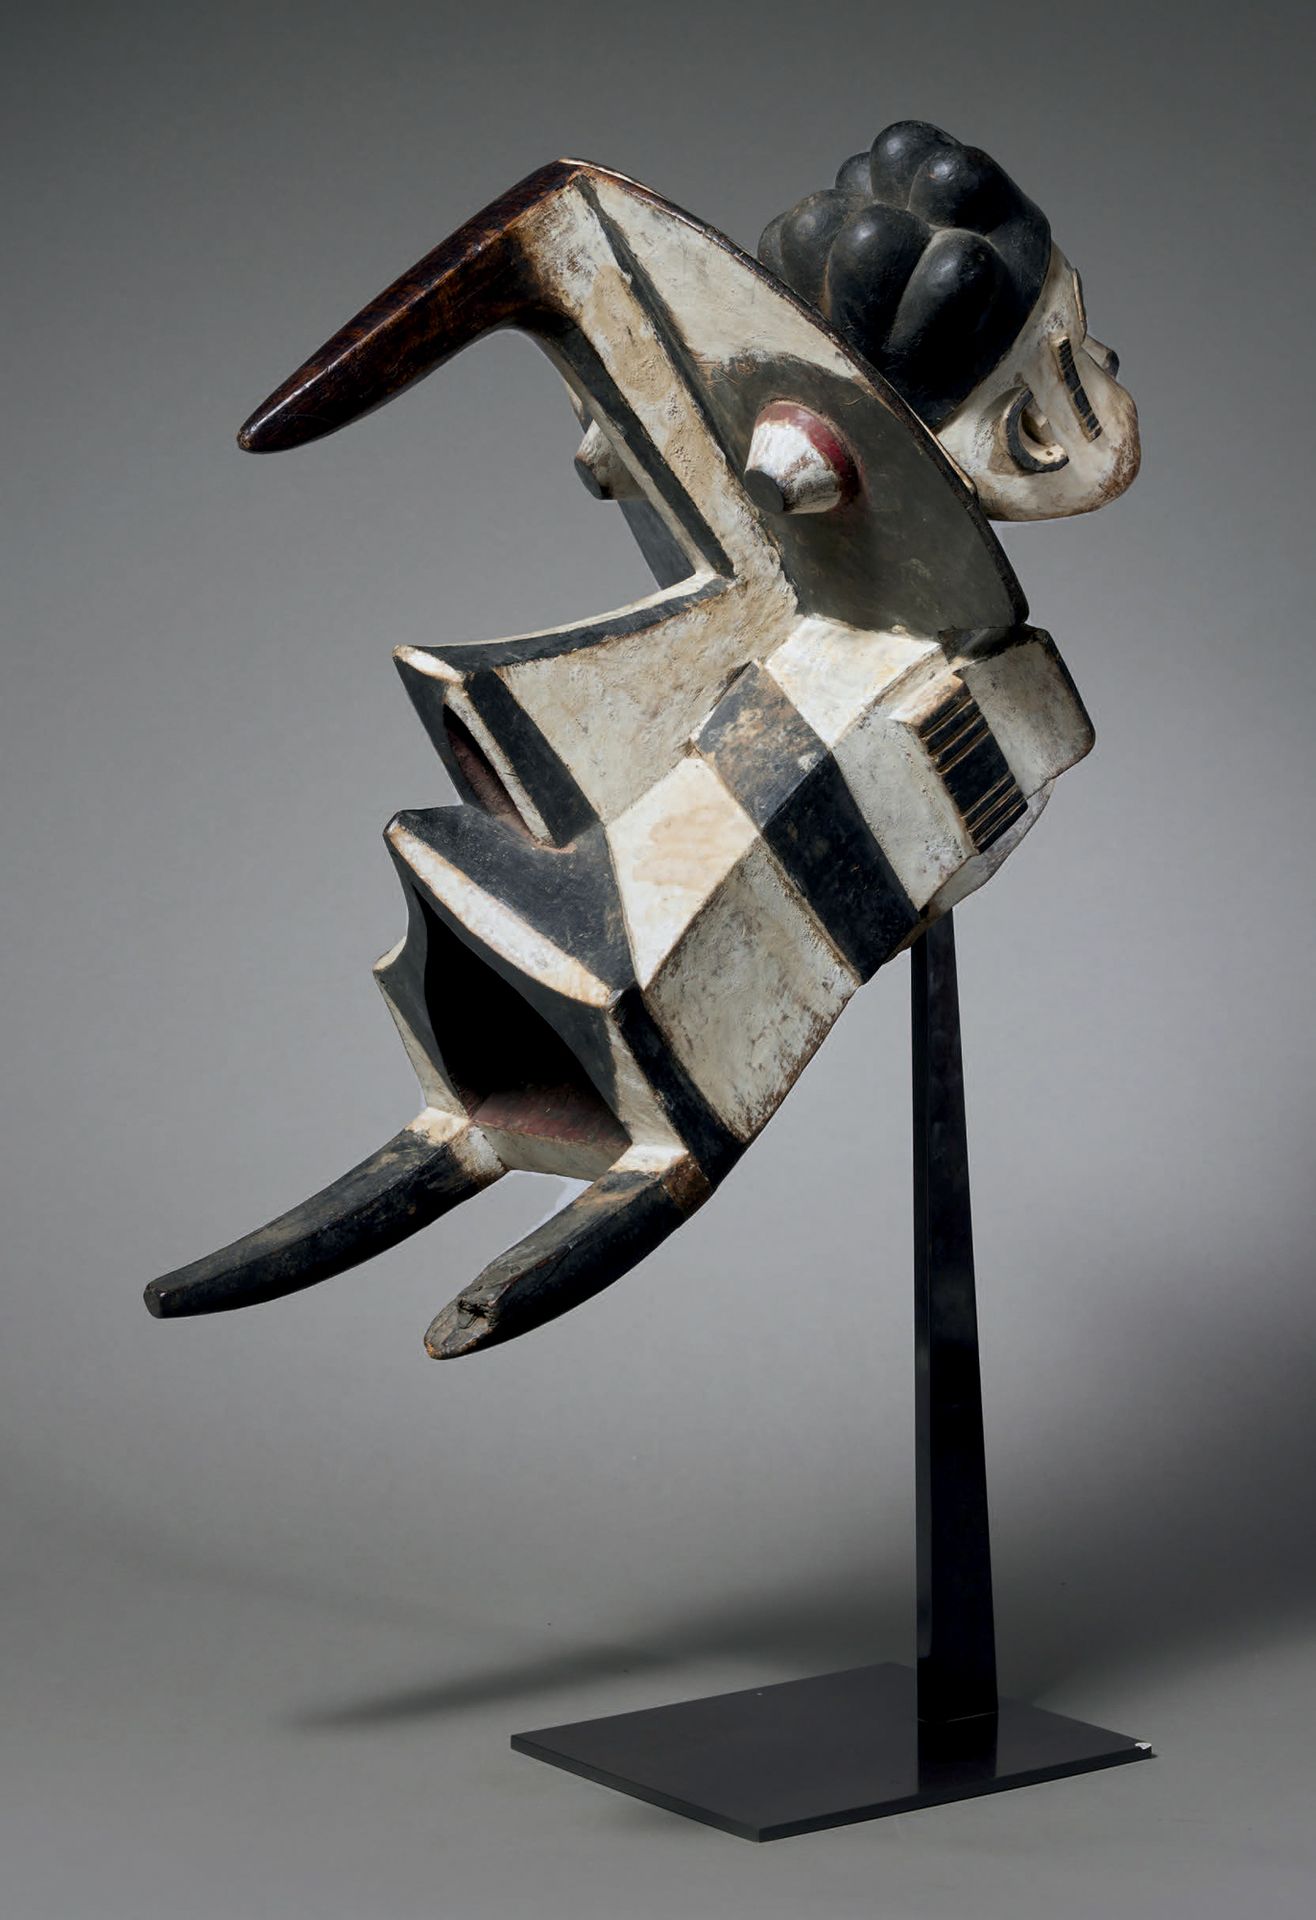 Null Mask Igbo-Izzi Ogbodo enyi
Nigeria
Wood
H. 36 cm - L. 60 cm
Mask with audac&hellip;